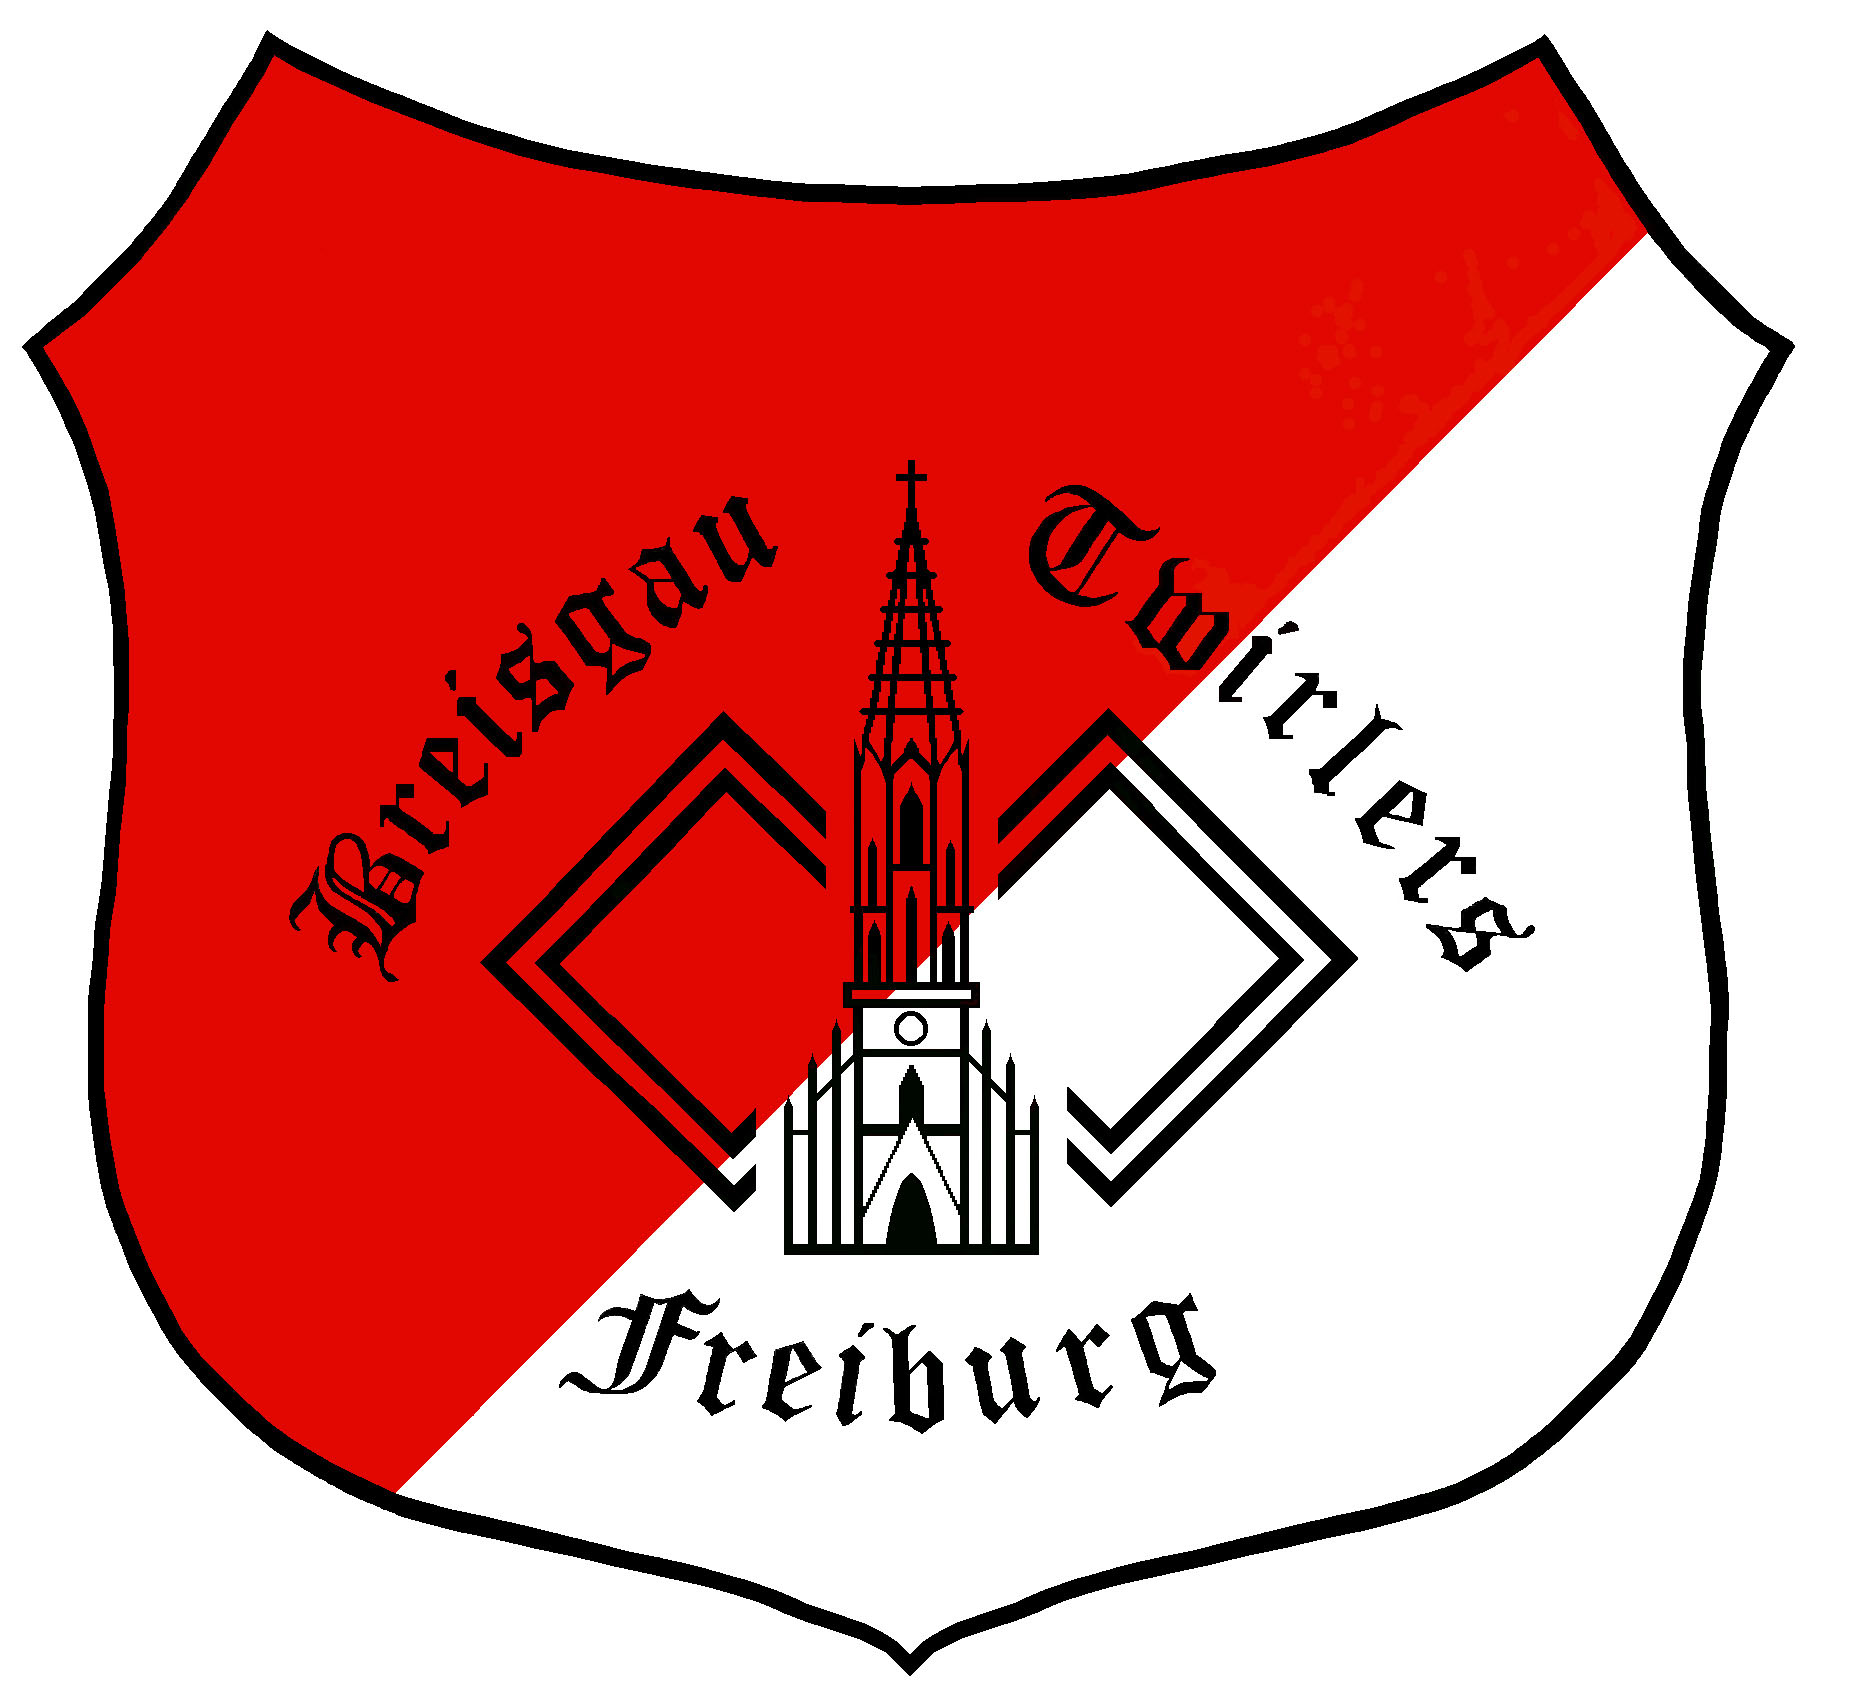 Breisgau Twirlers Freiburg e.V.